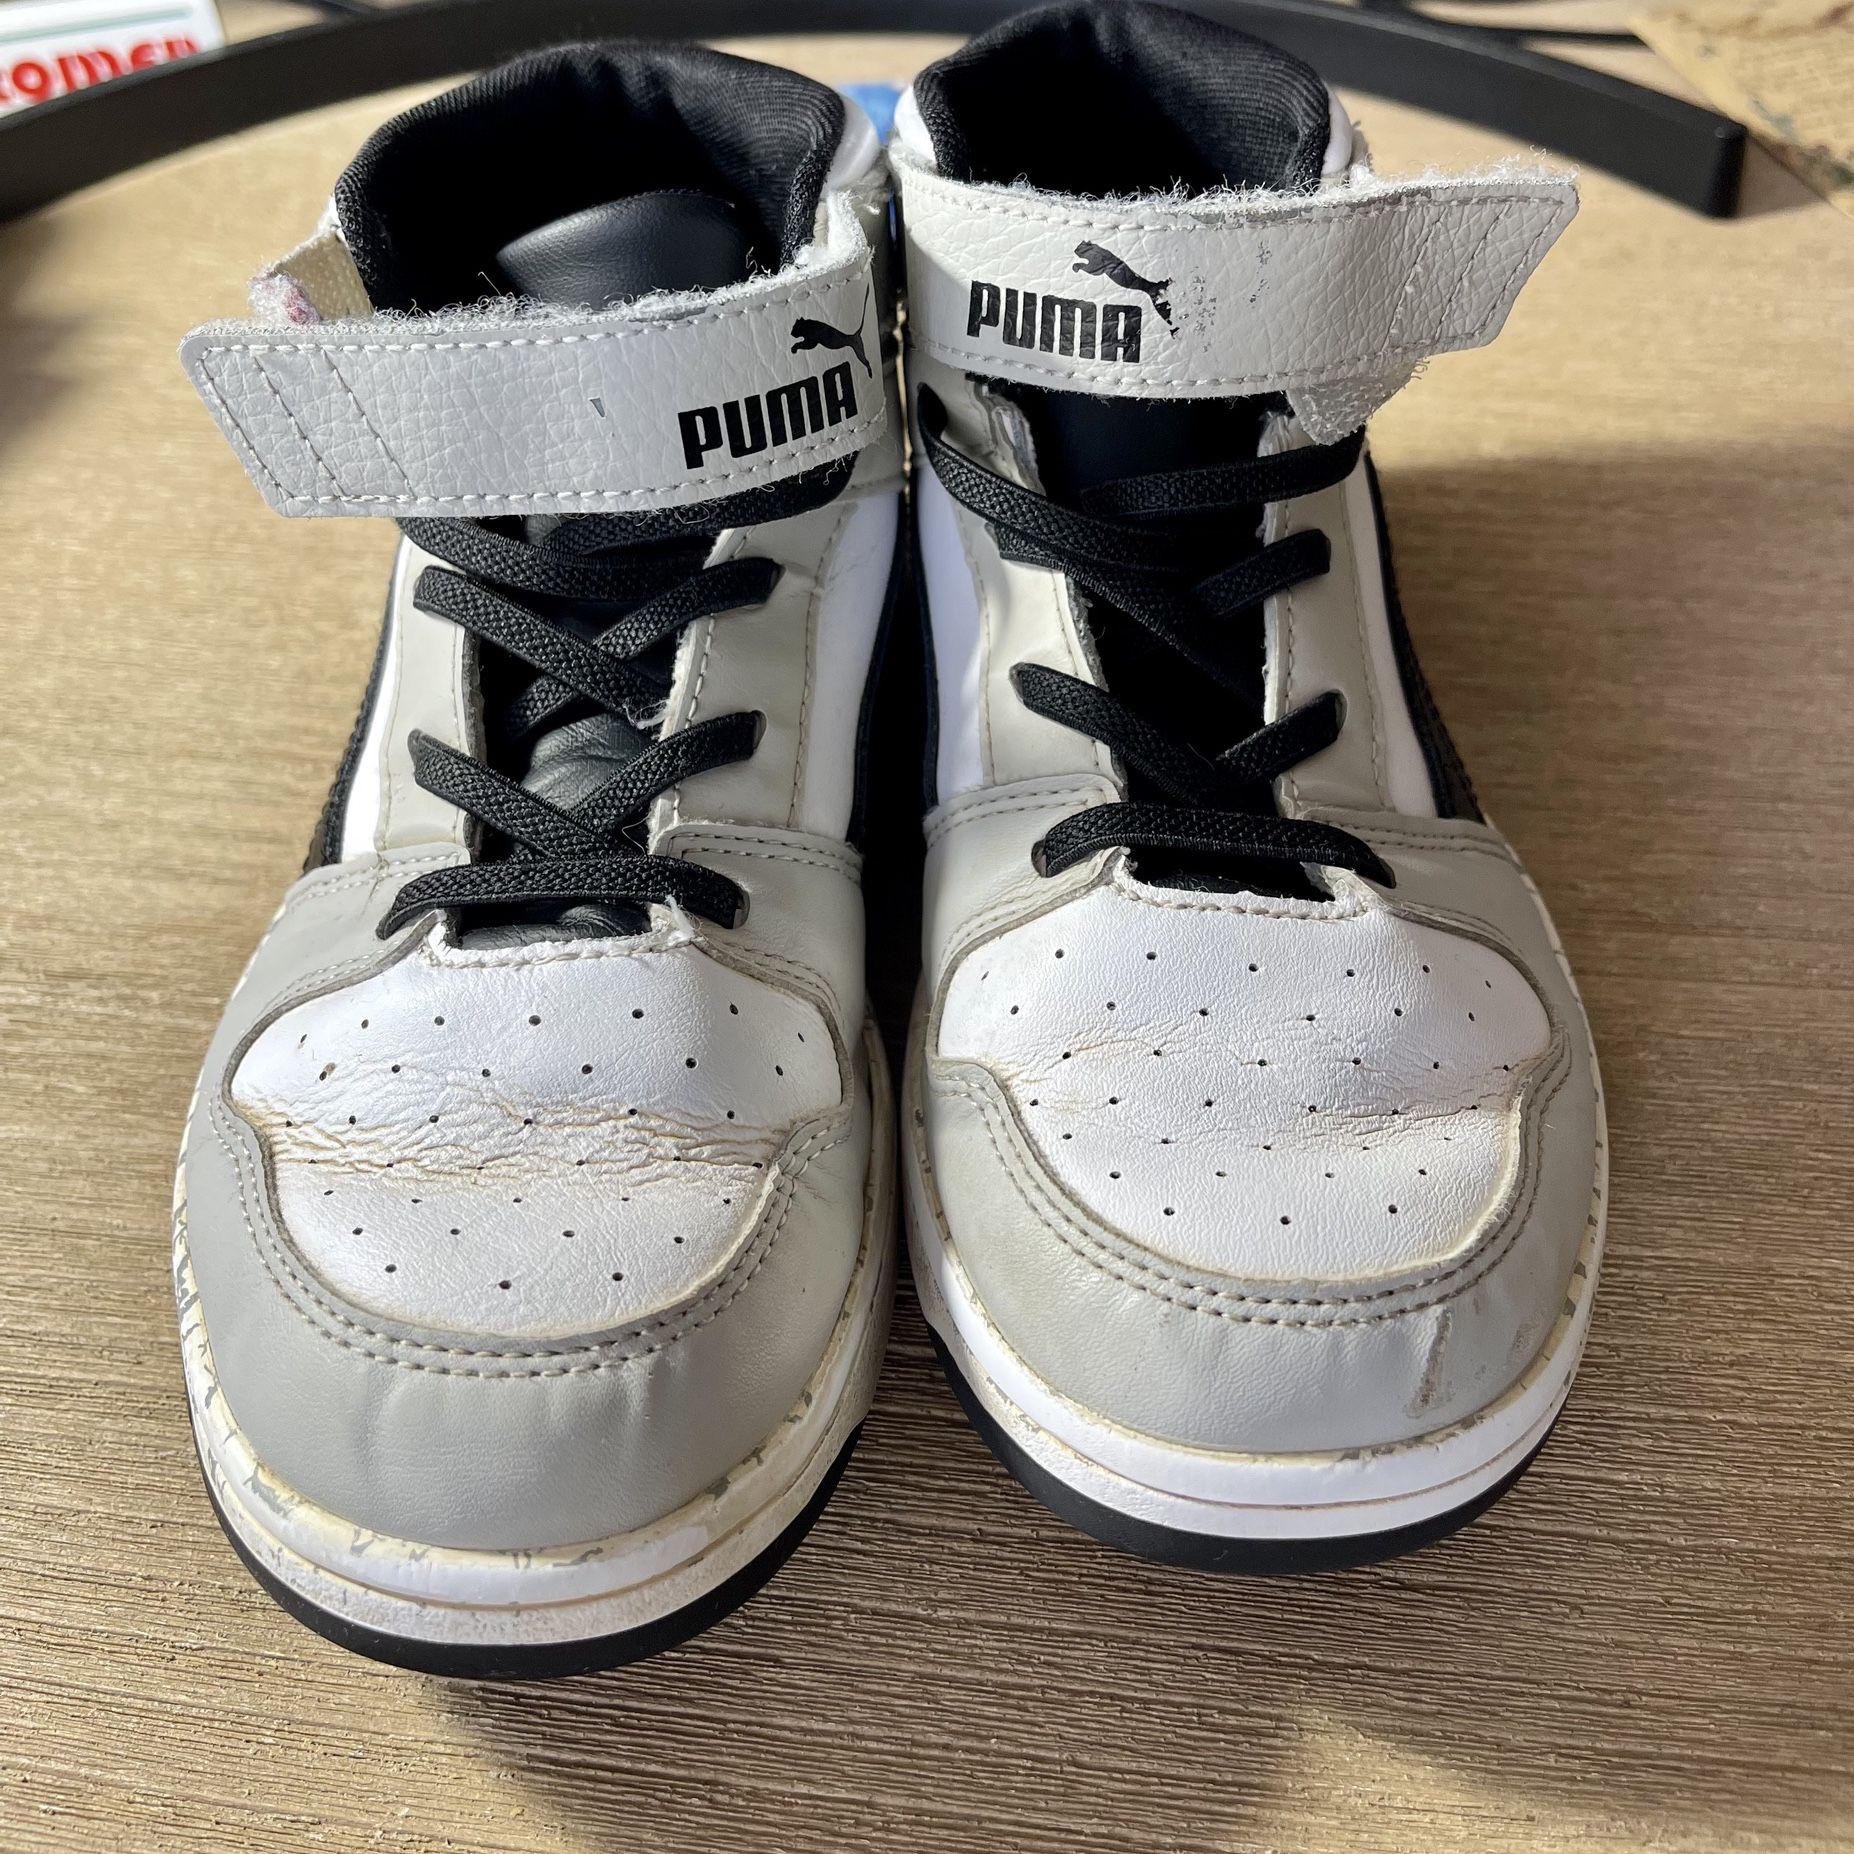 PUMA Boys Genuine Leather Basketball Shoes Size 2.5C 